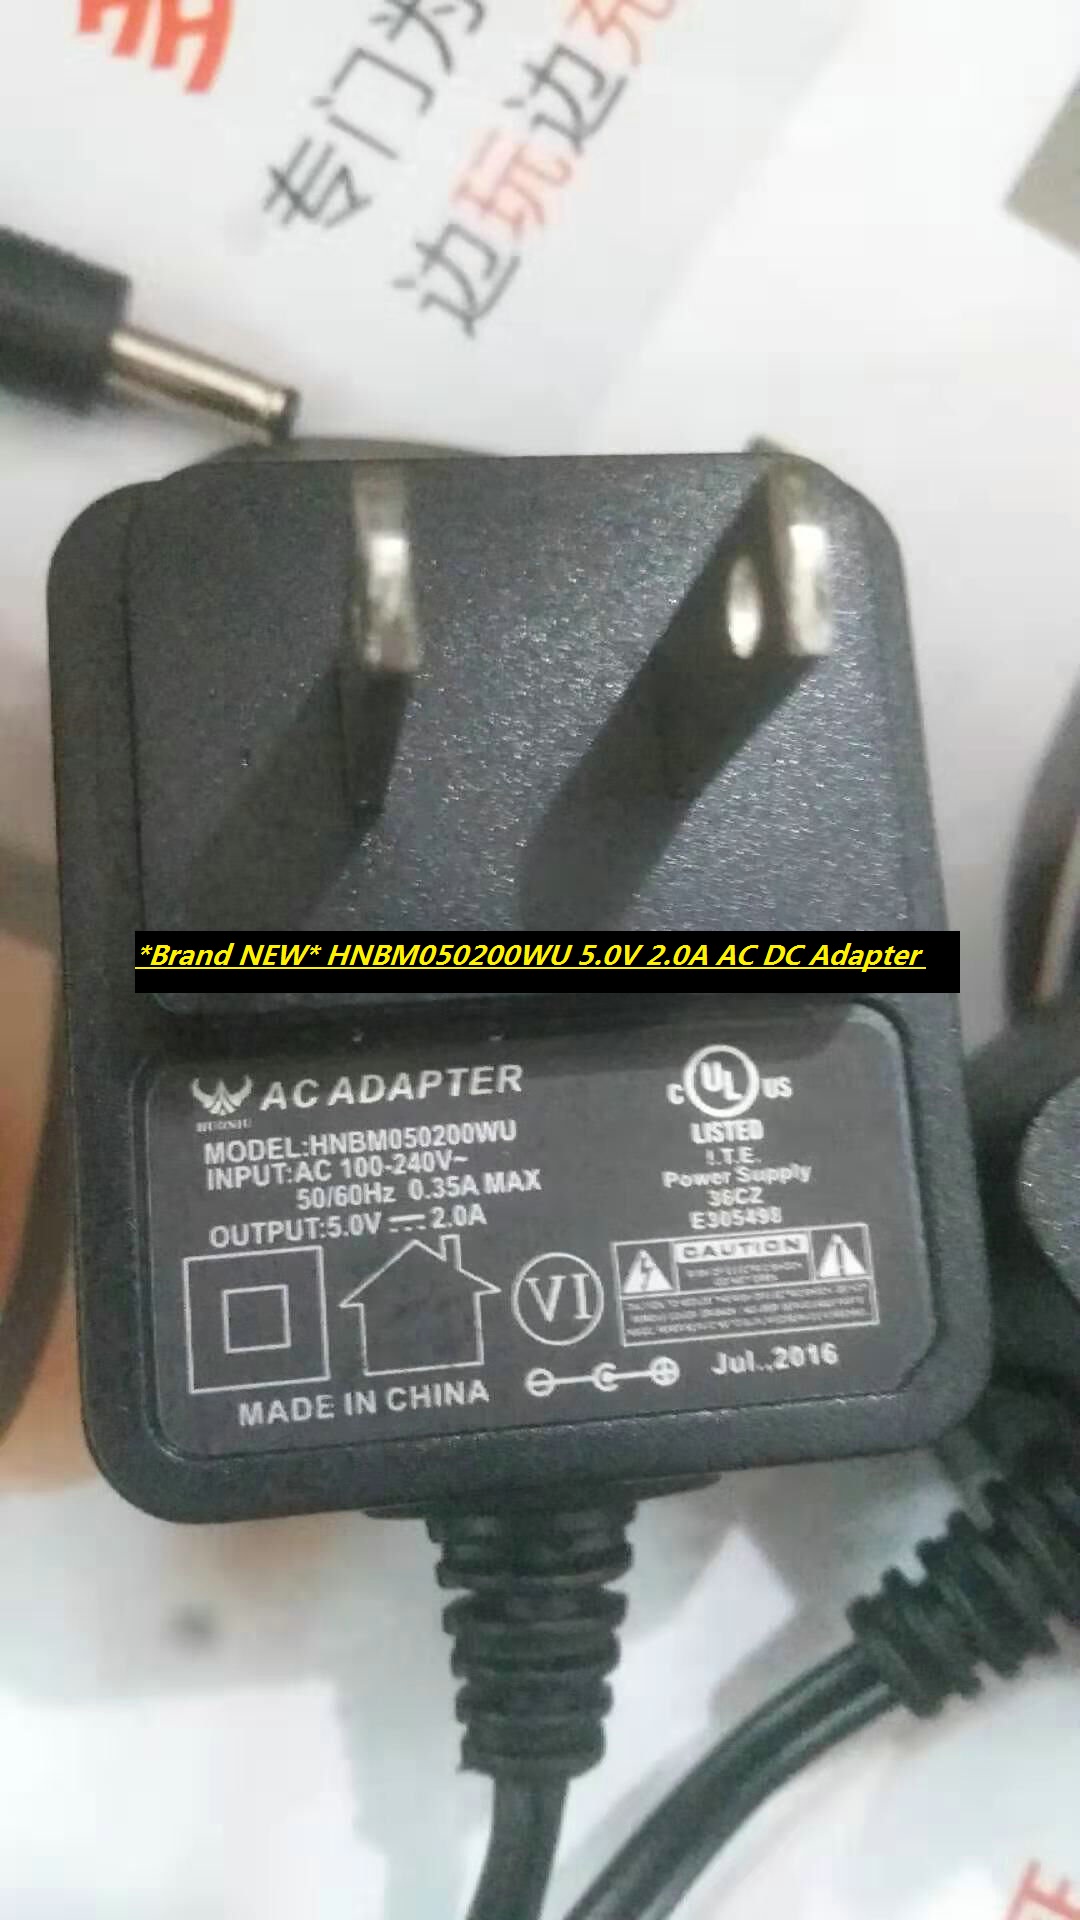 *Brand NEW* HNBM050200WU 5.0V 2.0A AC DC Adapter POWER SUPPLY